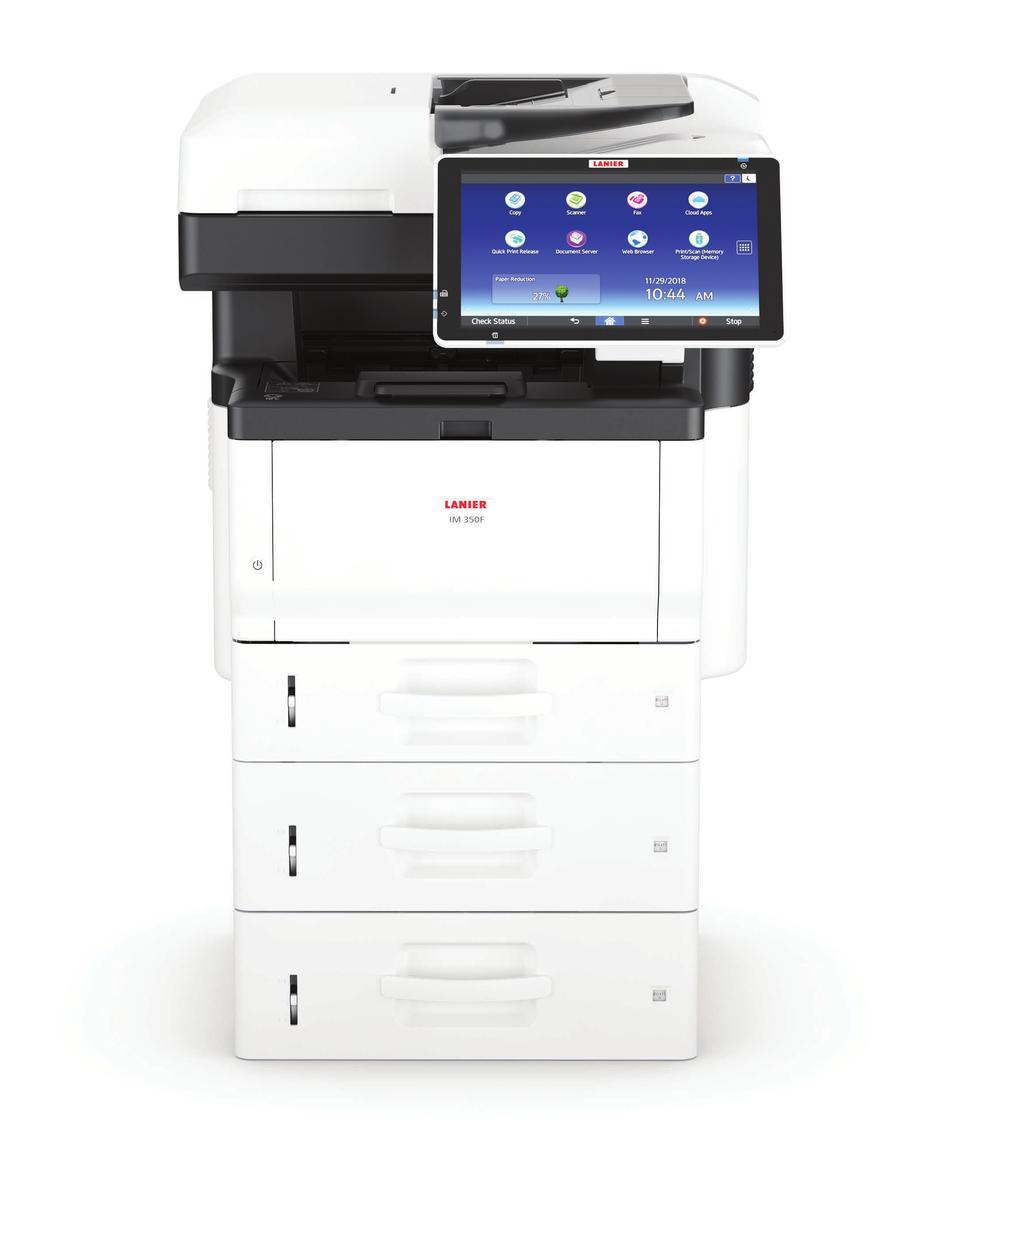 Off-line Stapler High-volume LEGEND Capabilities Connectivity Speed 20 Copy Print Scan Fax Wireless